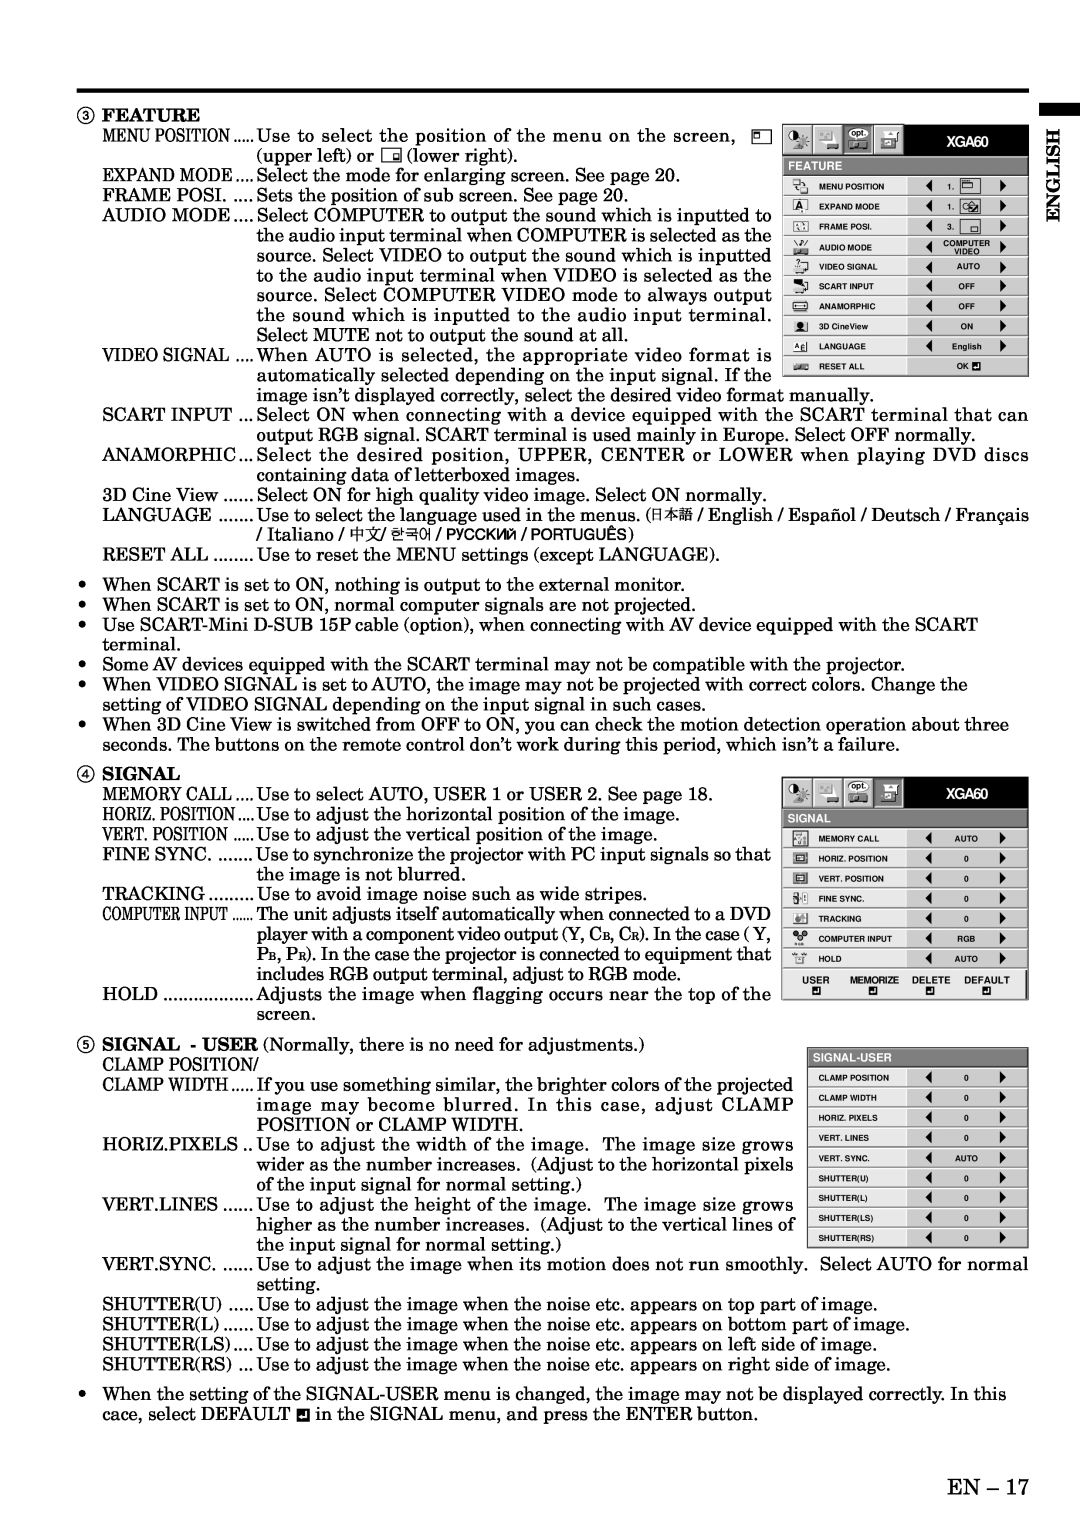 Mitsubishi Electronics XL2U user manual LANGUAGE ....... Use to select the language used in the menus 